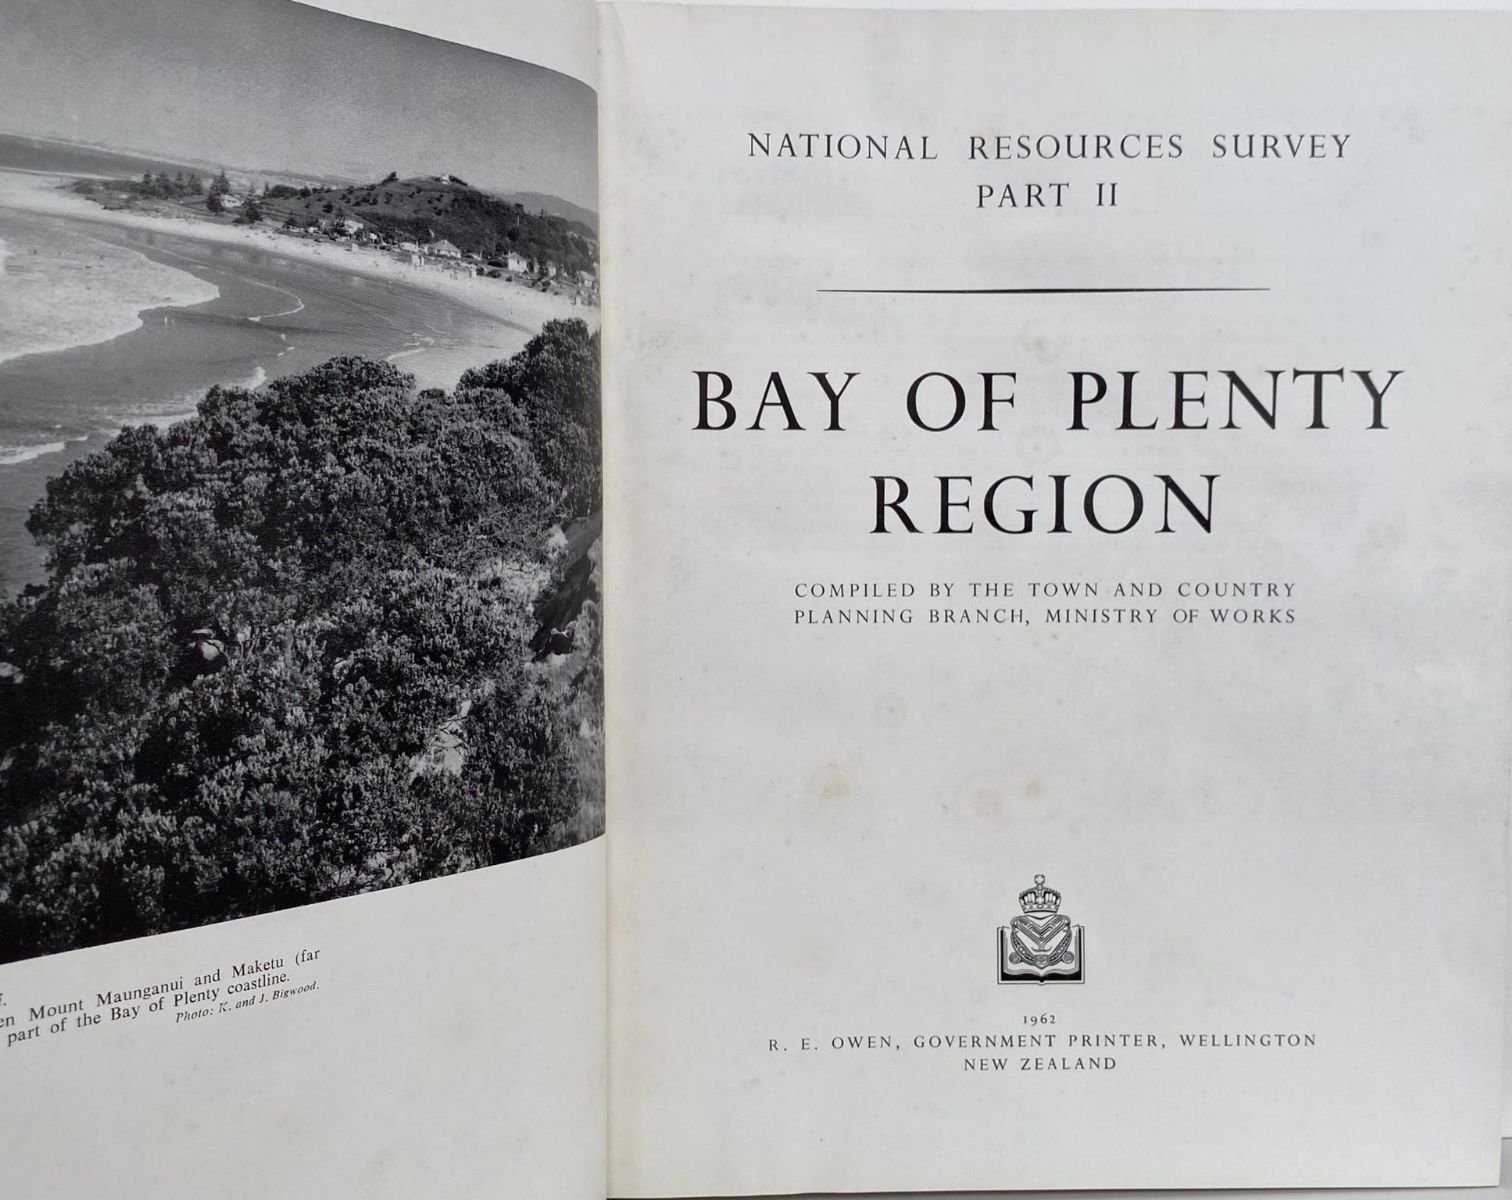 NATIONAL RESOURCES SURVEY; Part II - Bay of Plenty Region